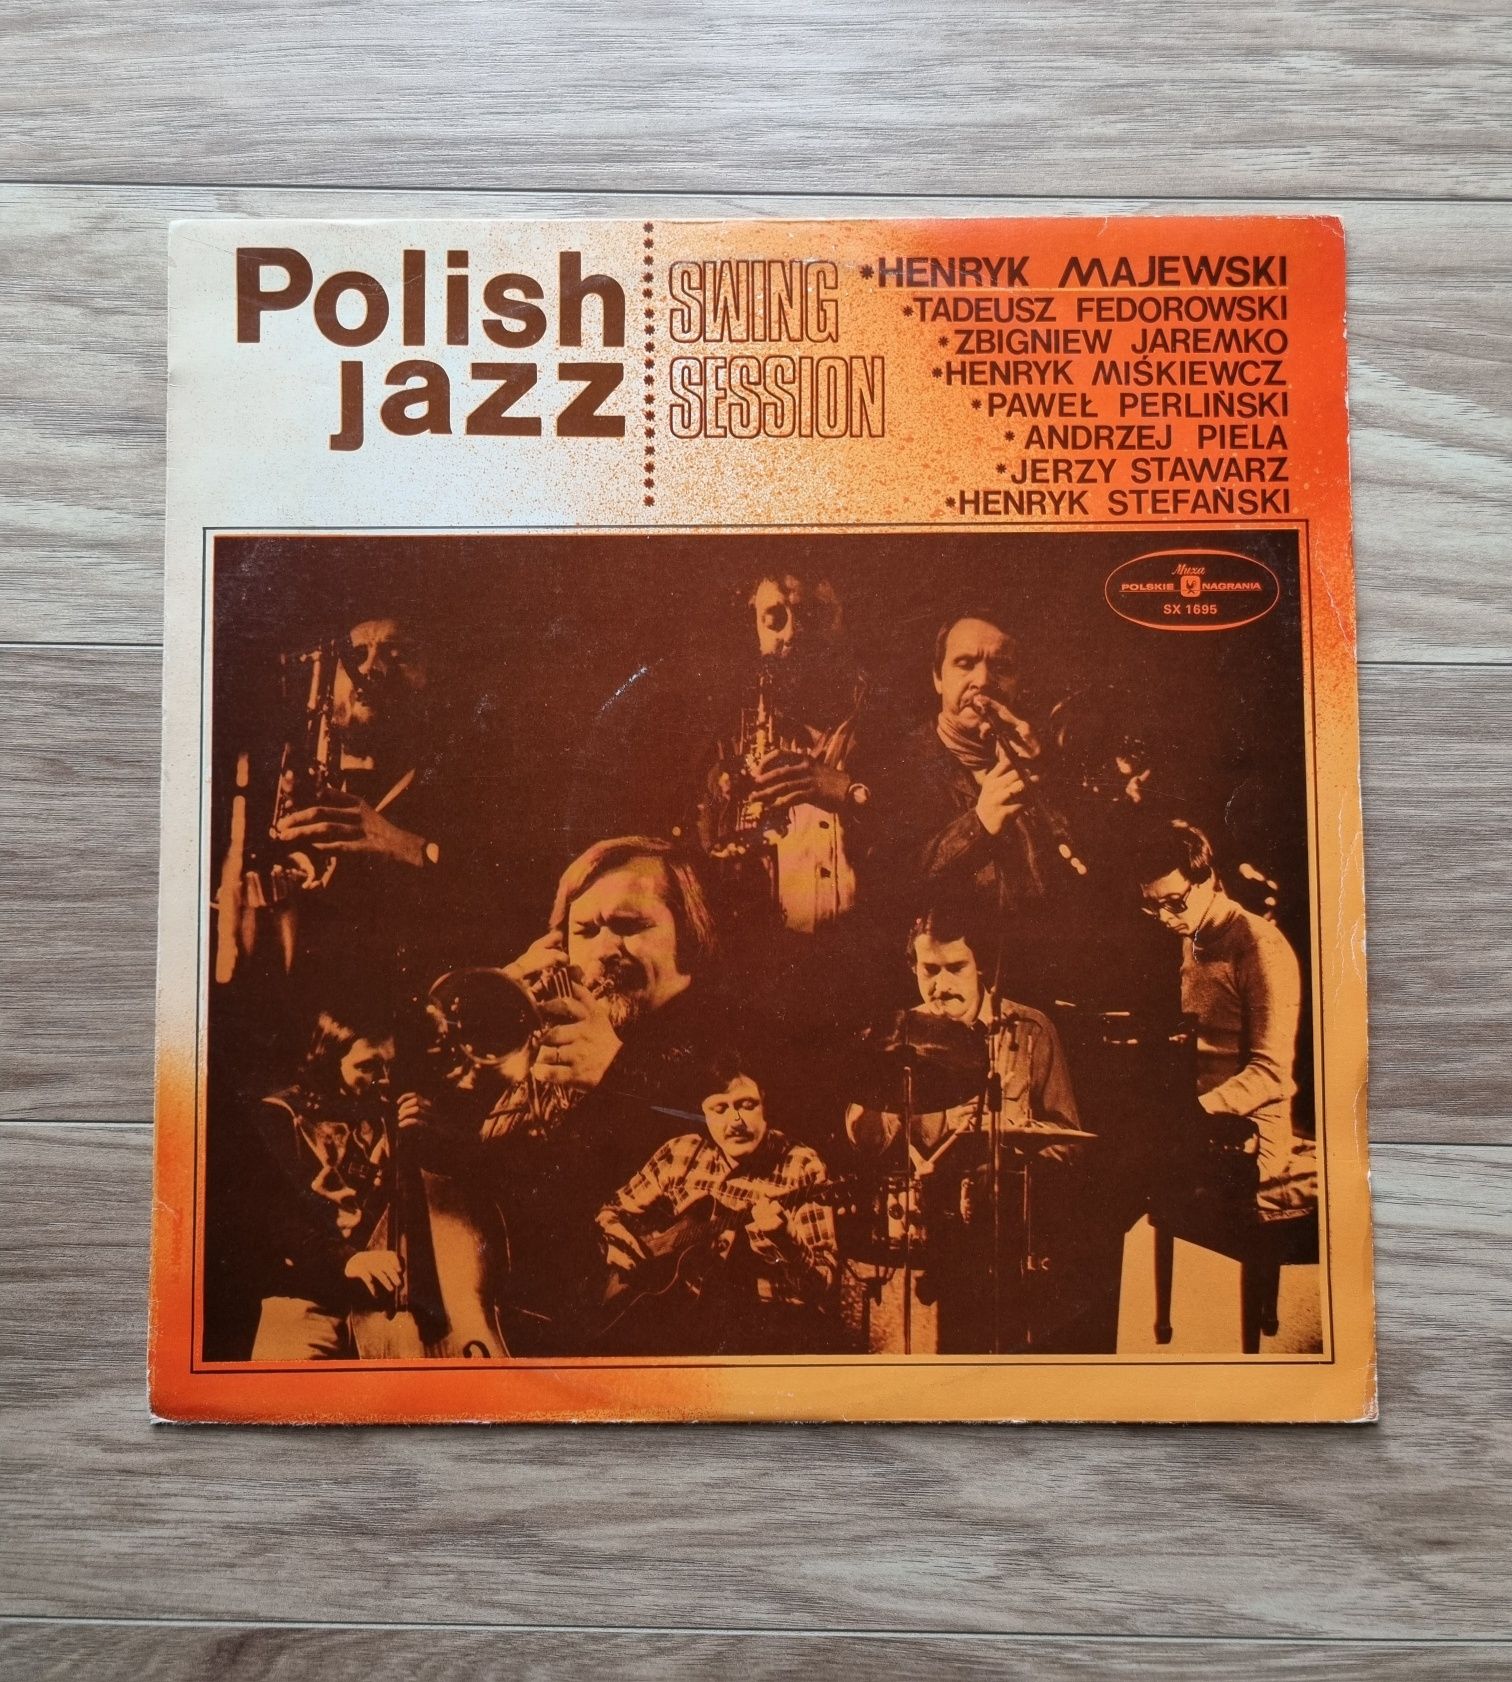 Polish Jazz vol. 56 Swing Session